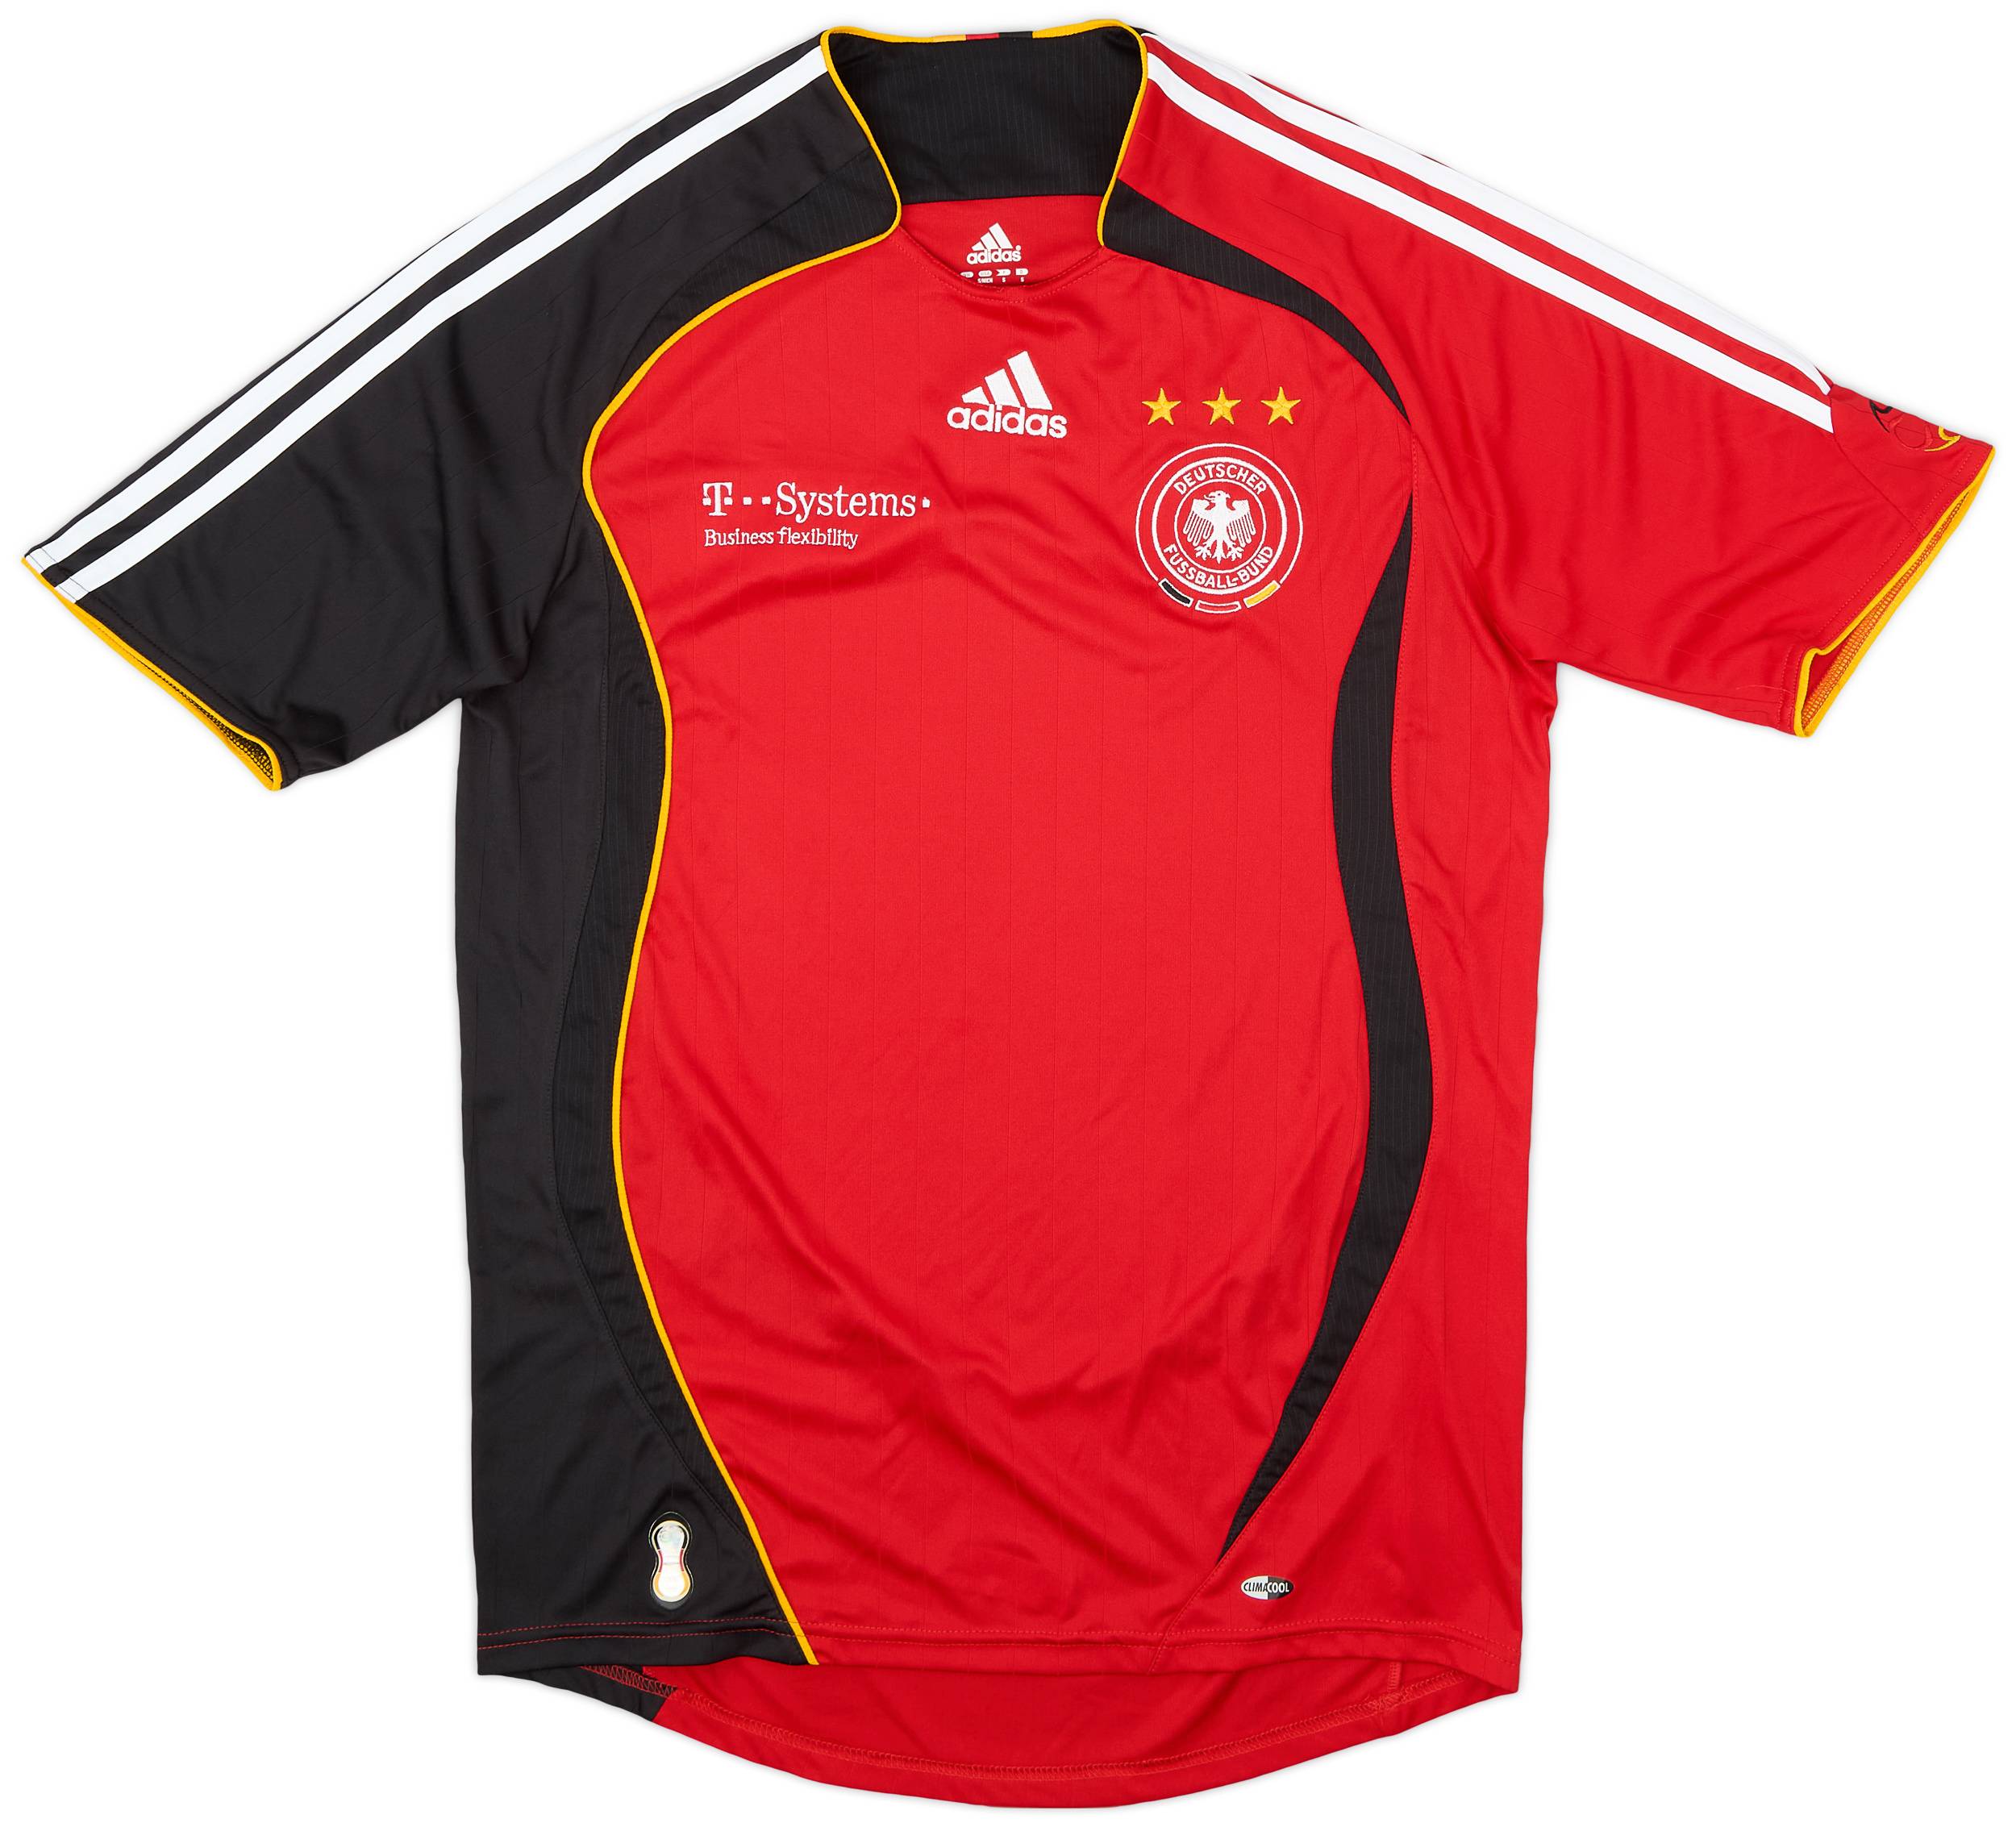 2005-07 Germany Away/Training Shirt - 9/10 - (S)